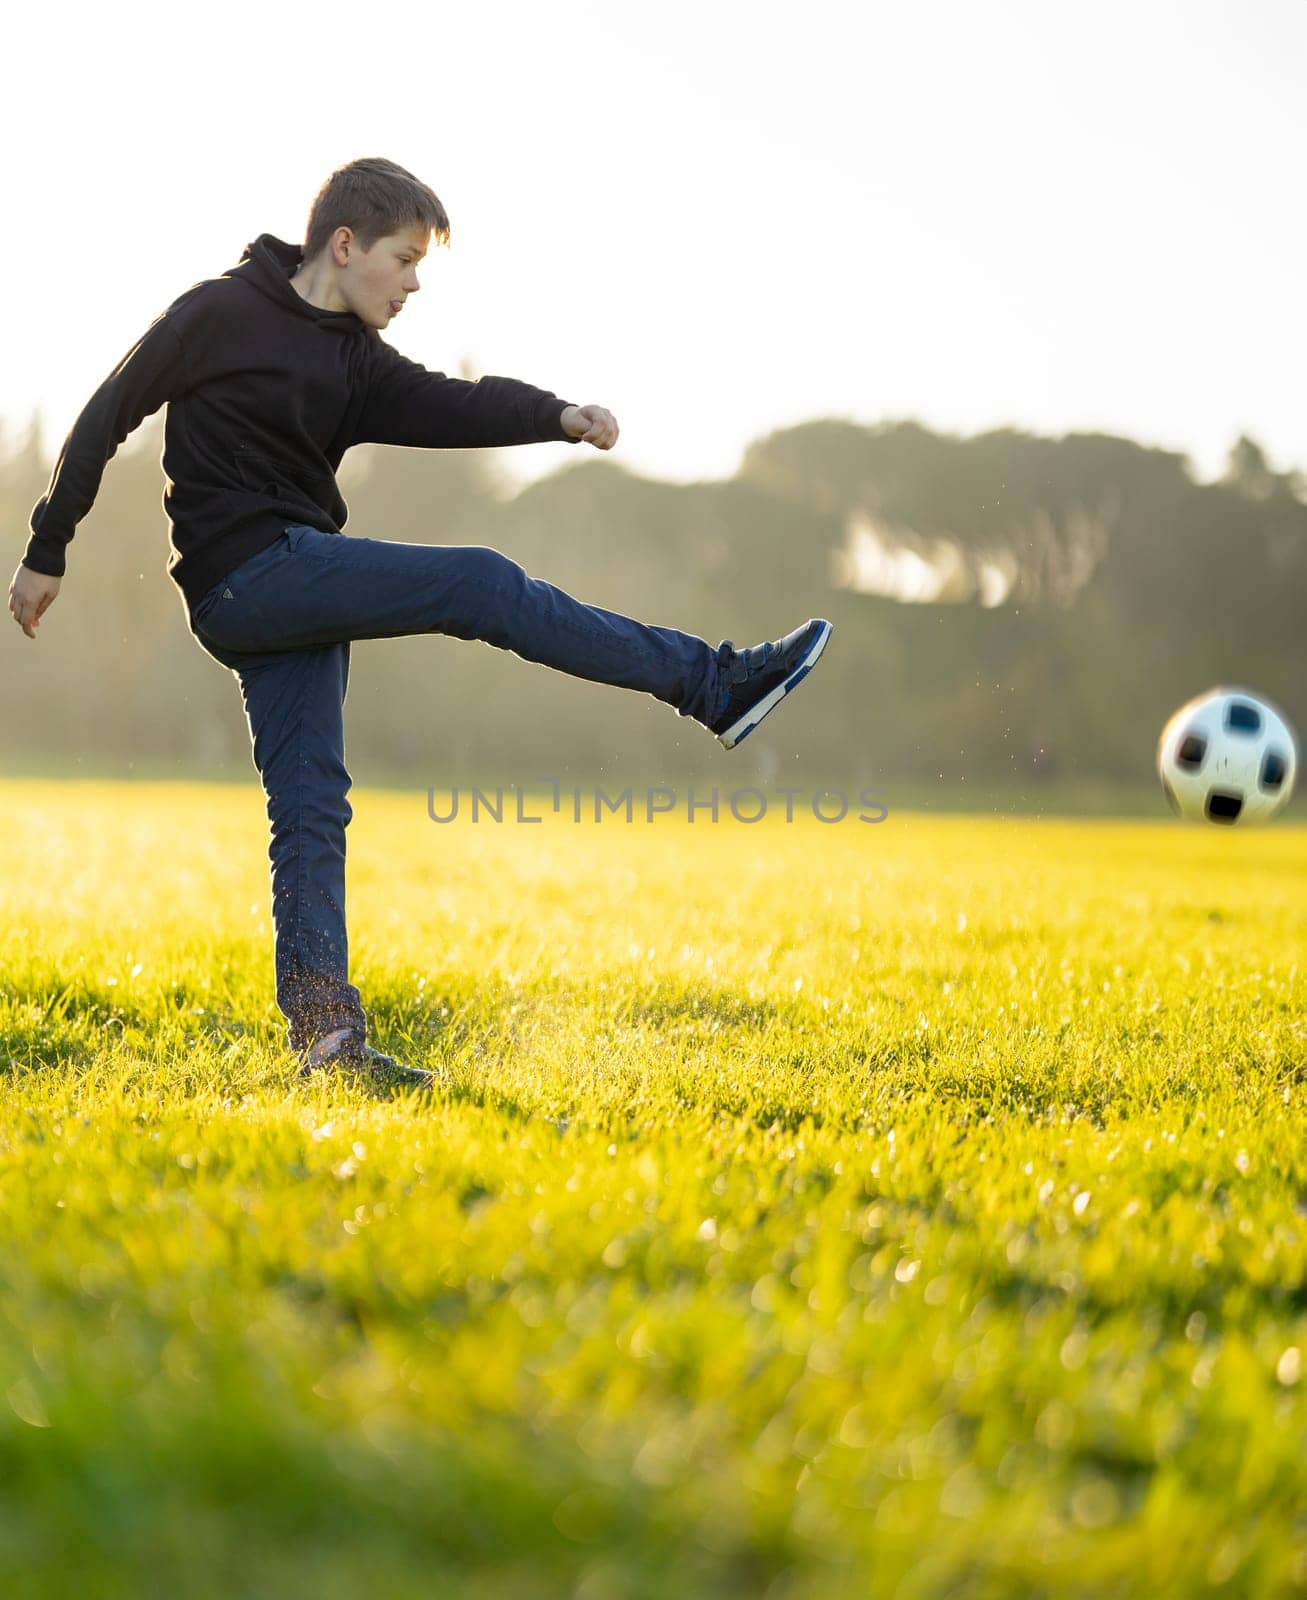 A boy kicks a soccer ball in a field by Studia72